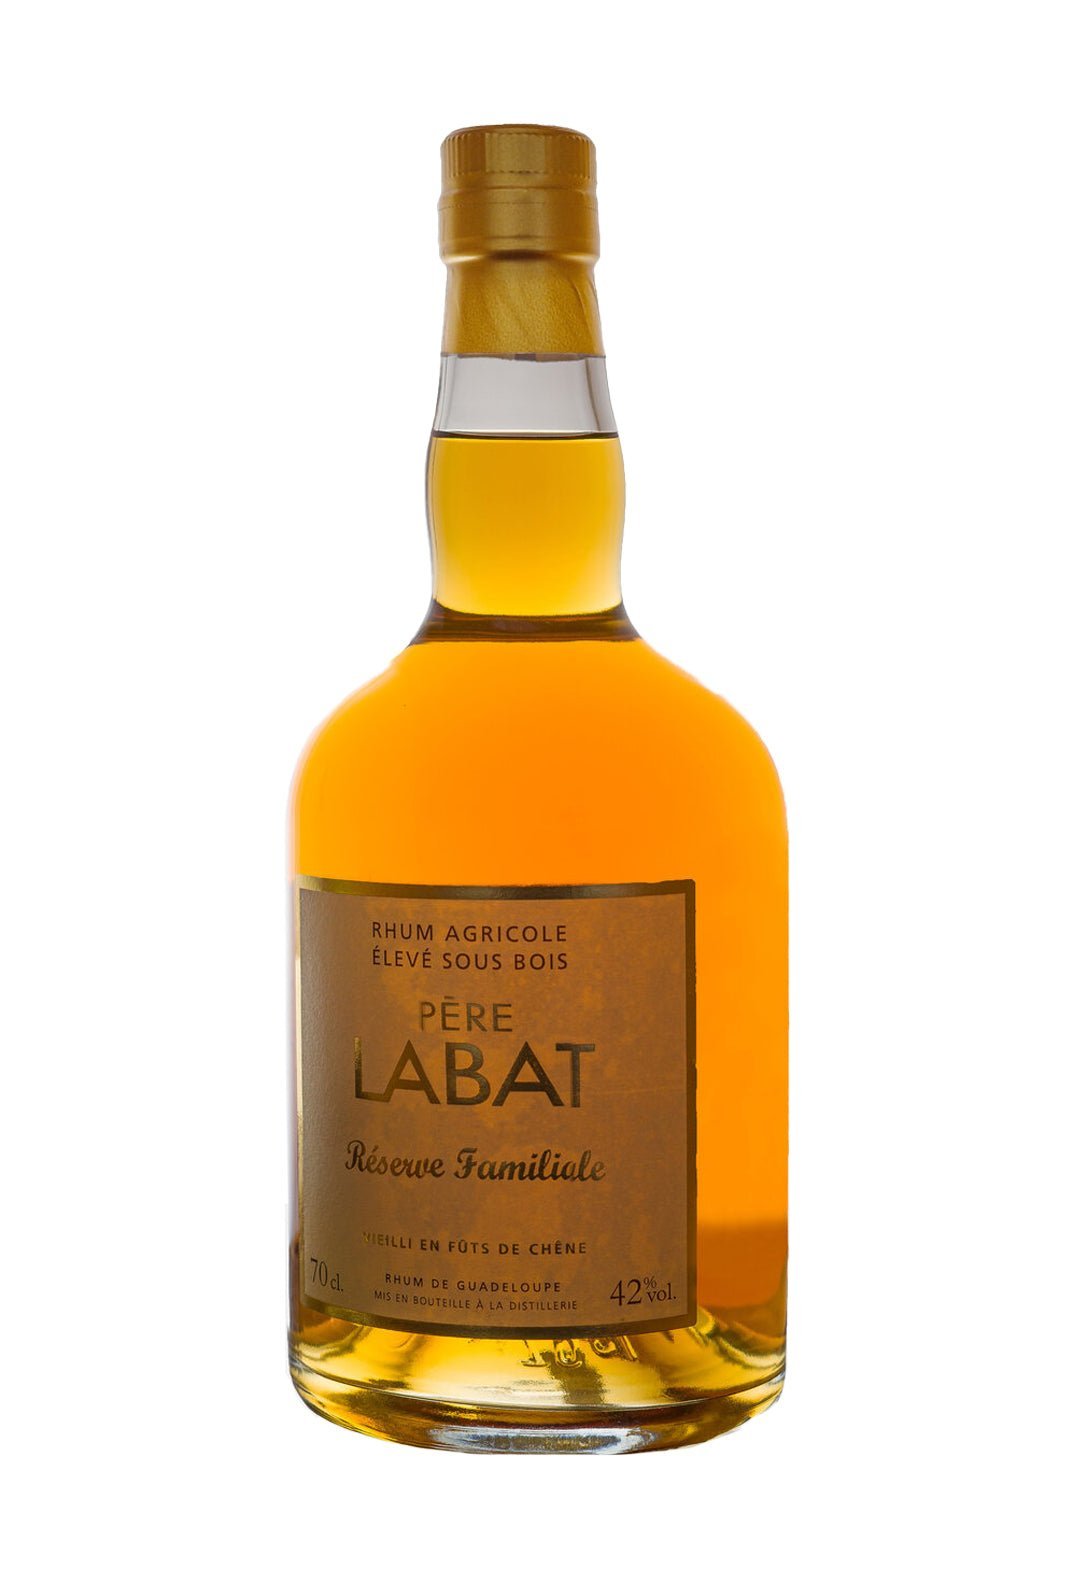 Labat Rum Reserve Familiale 42% 700ml | Rum | Shop online at Spirits of France